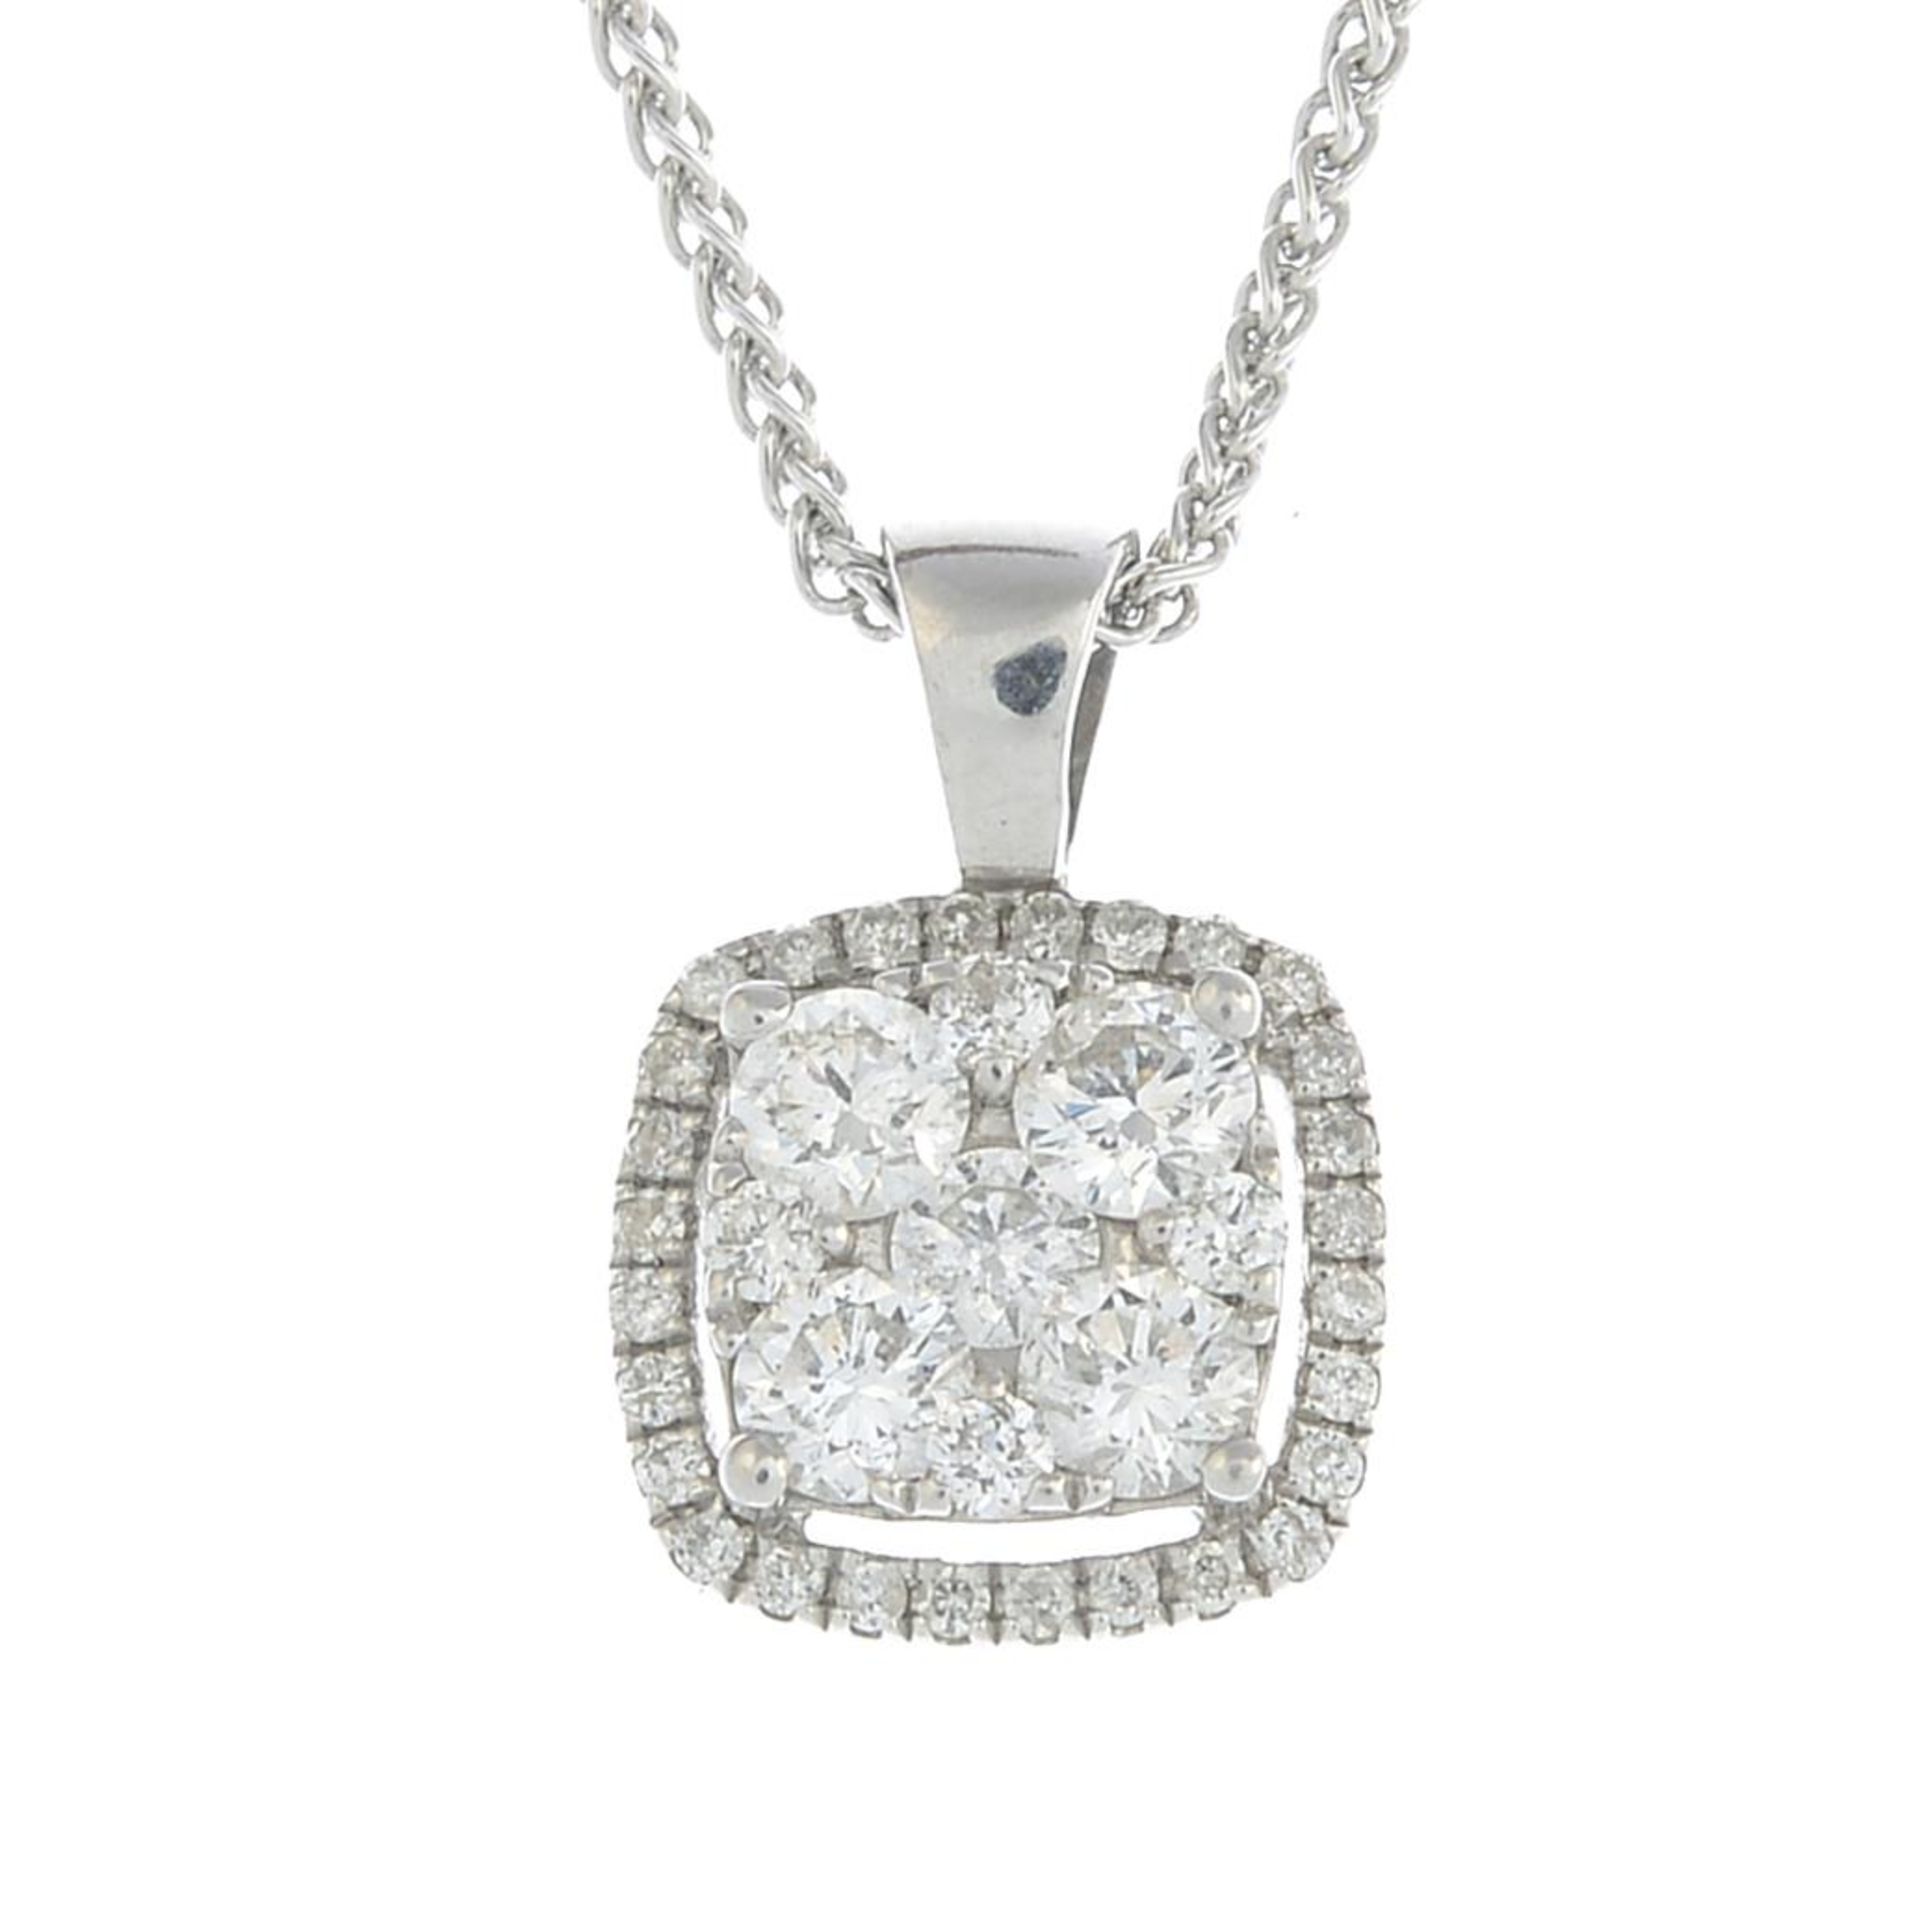 A brilliant-cut diamond pendant,